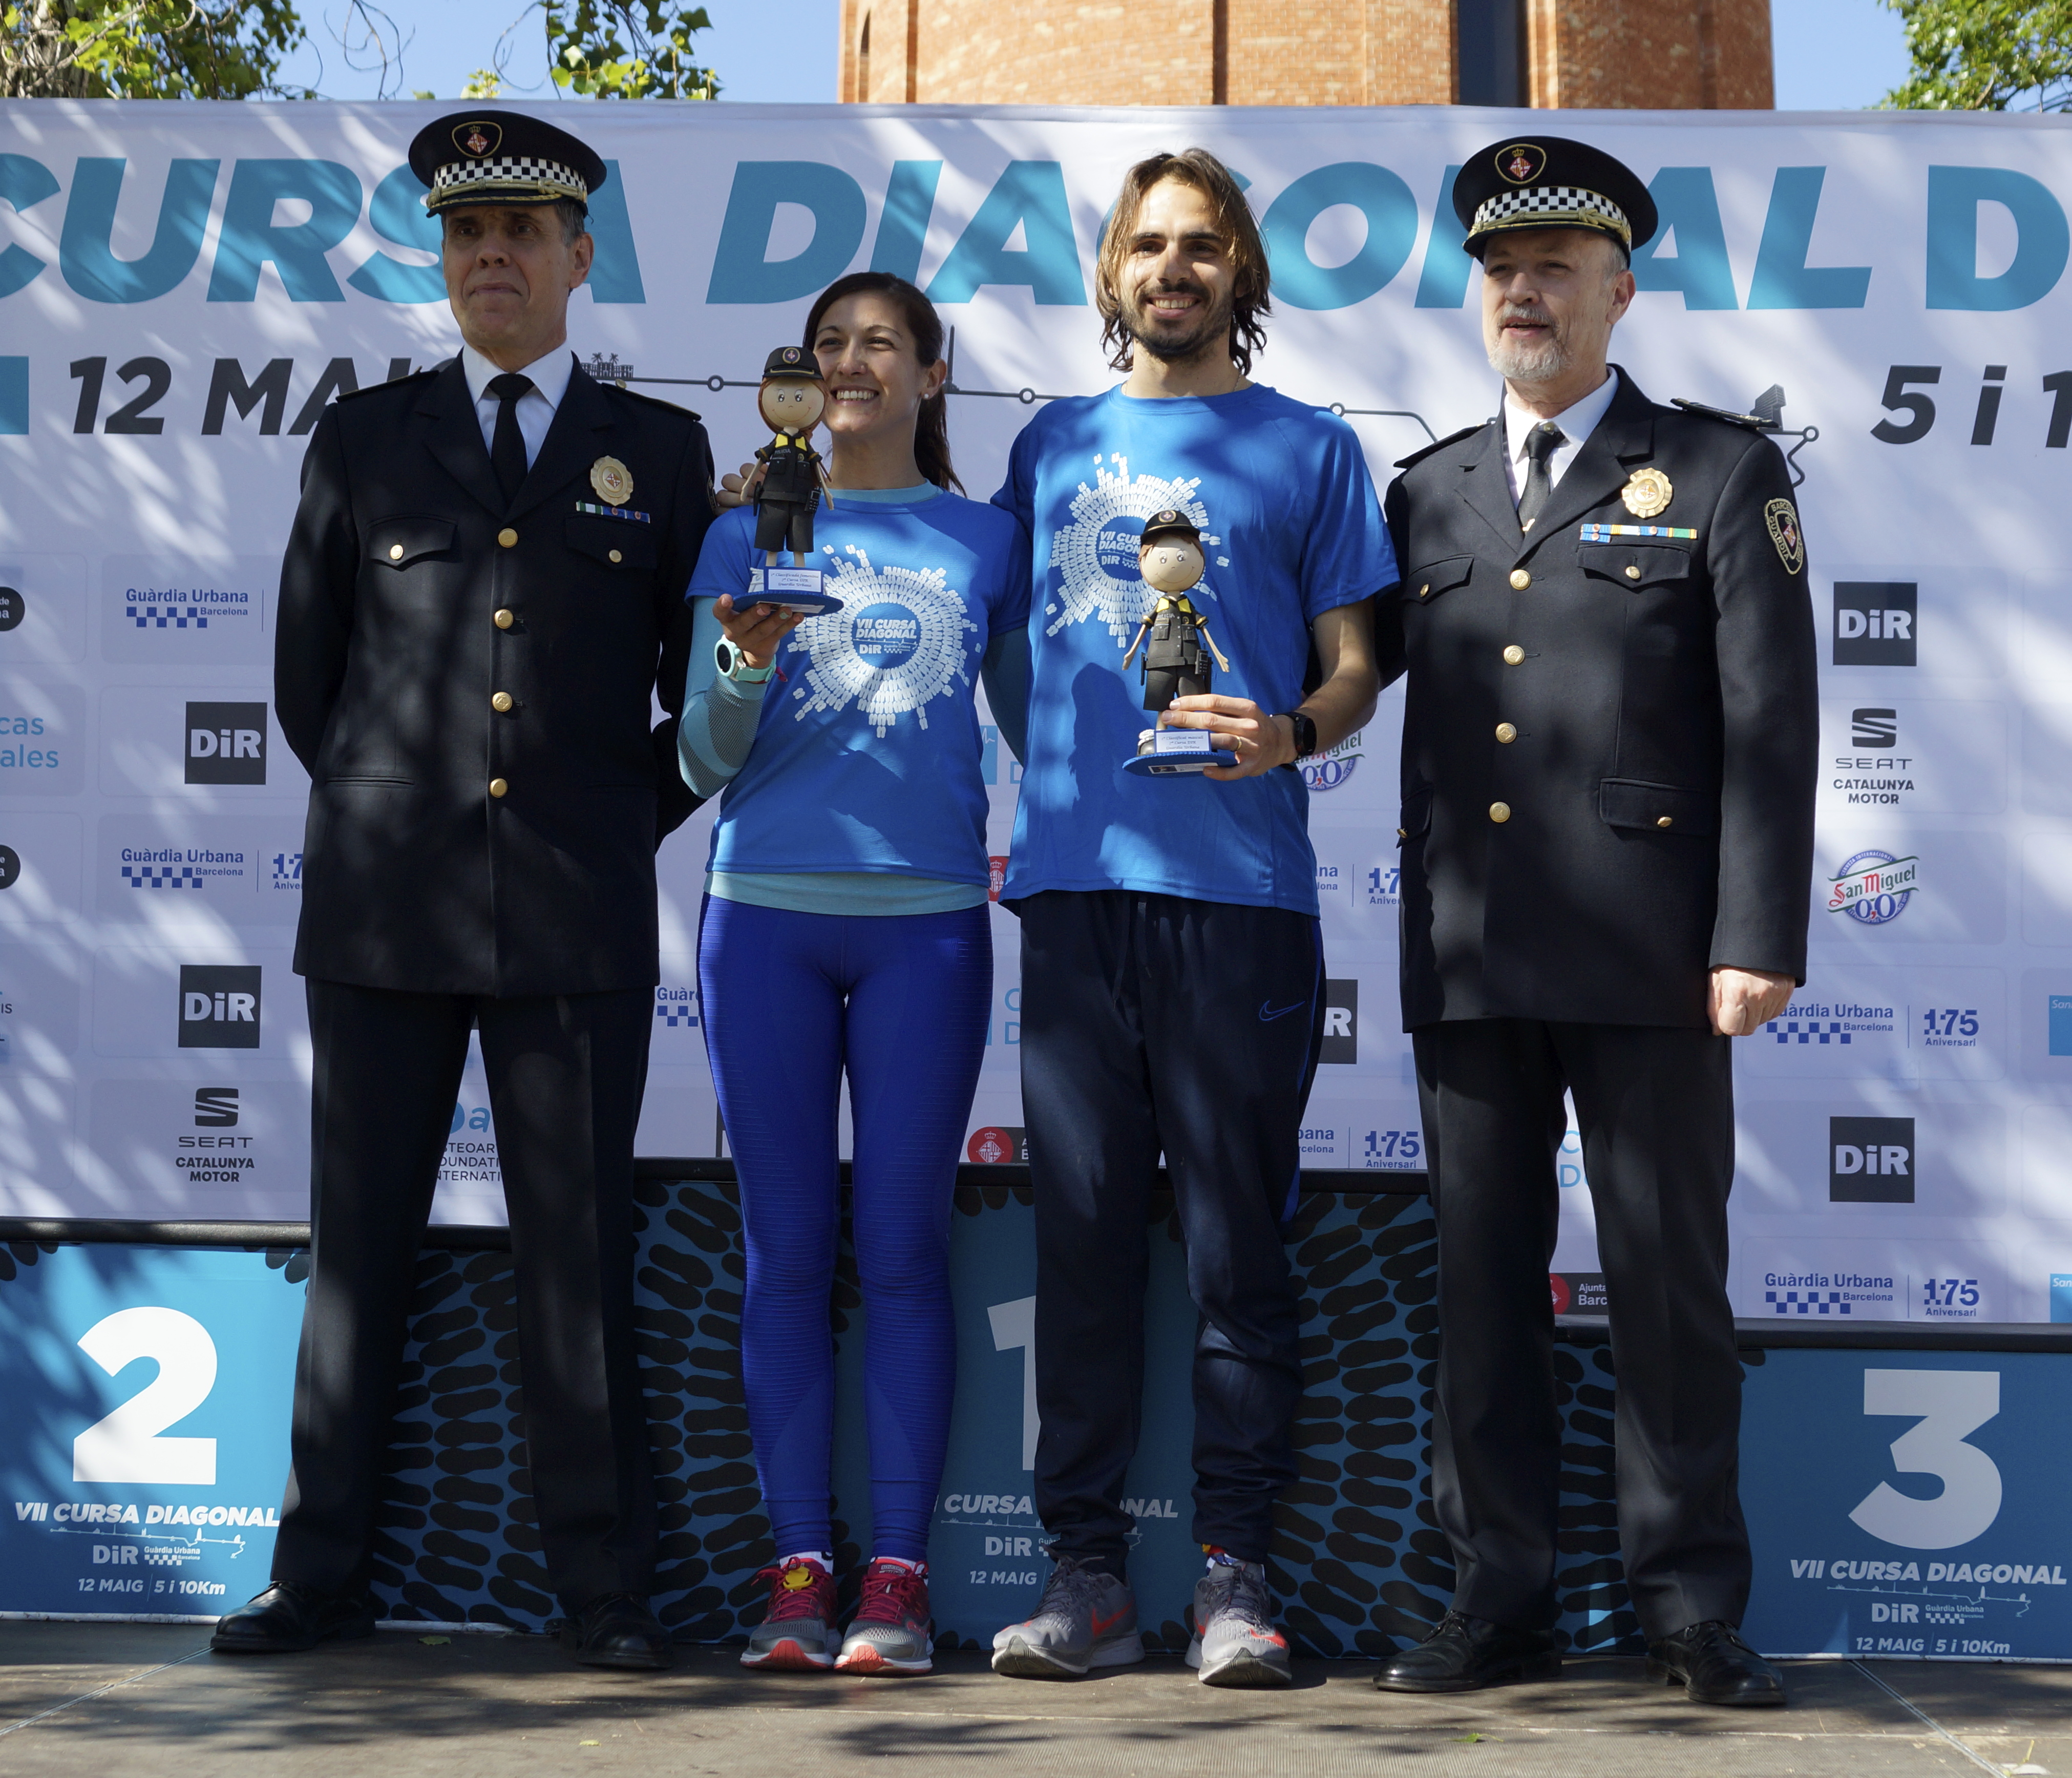 Cursa Diagonal 2019 Entrega premis GUB